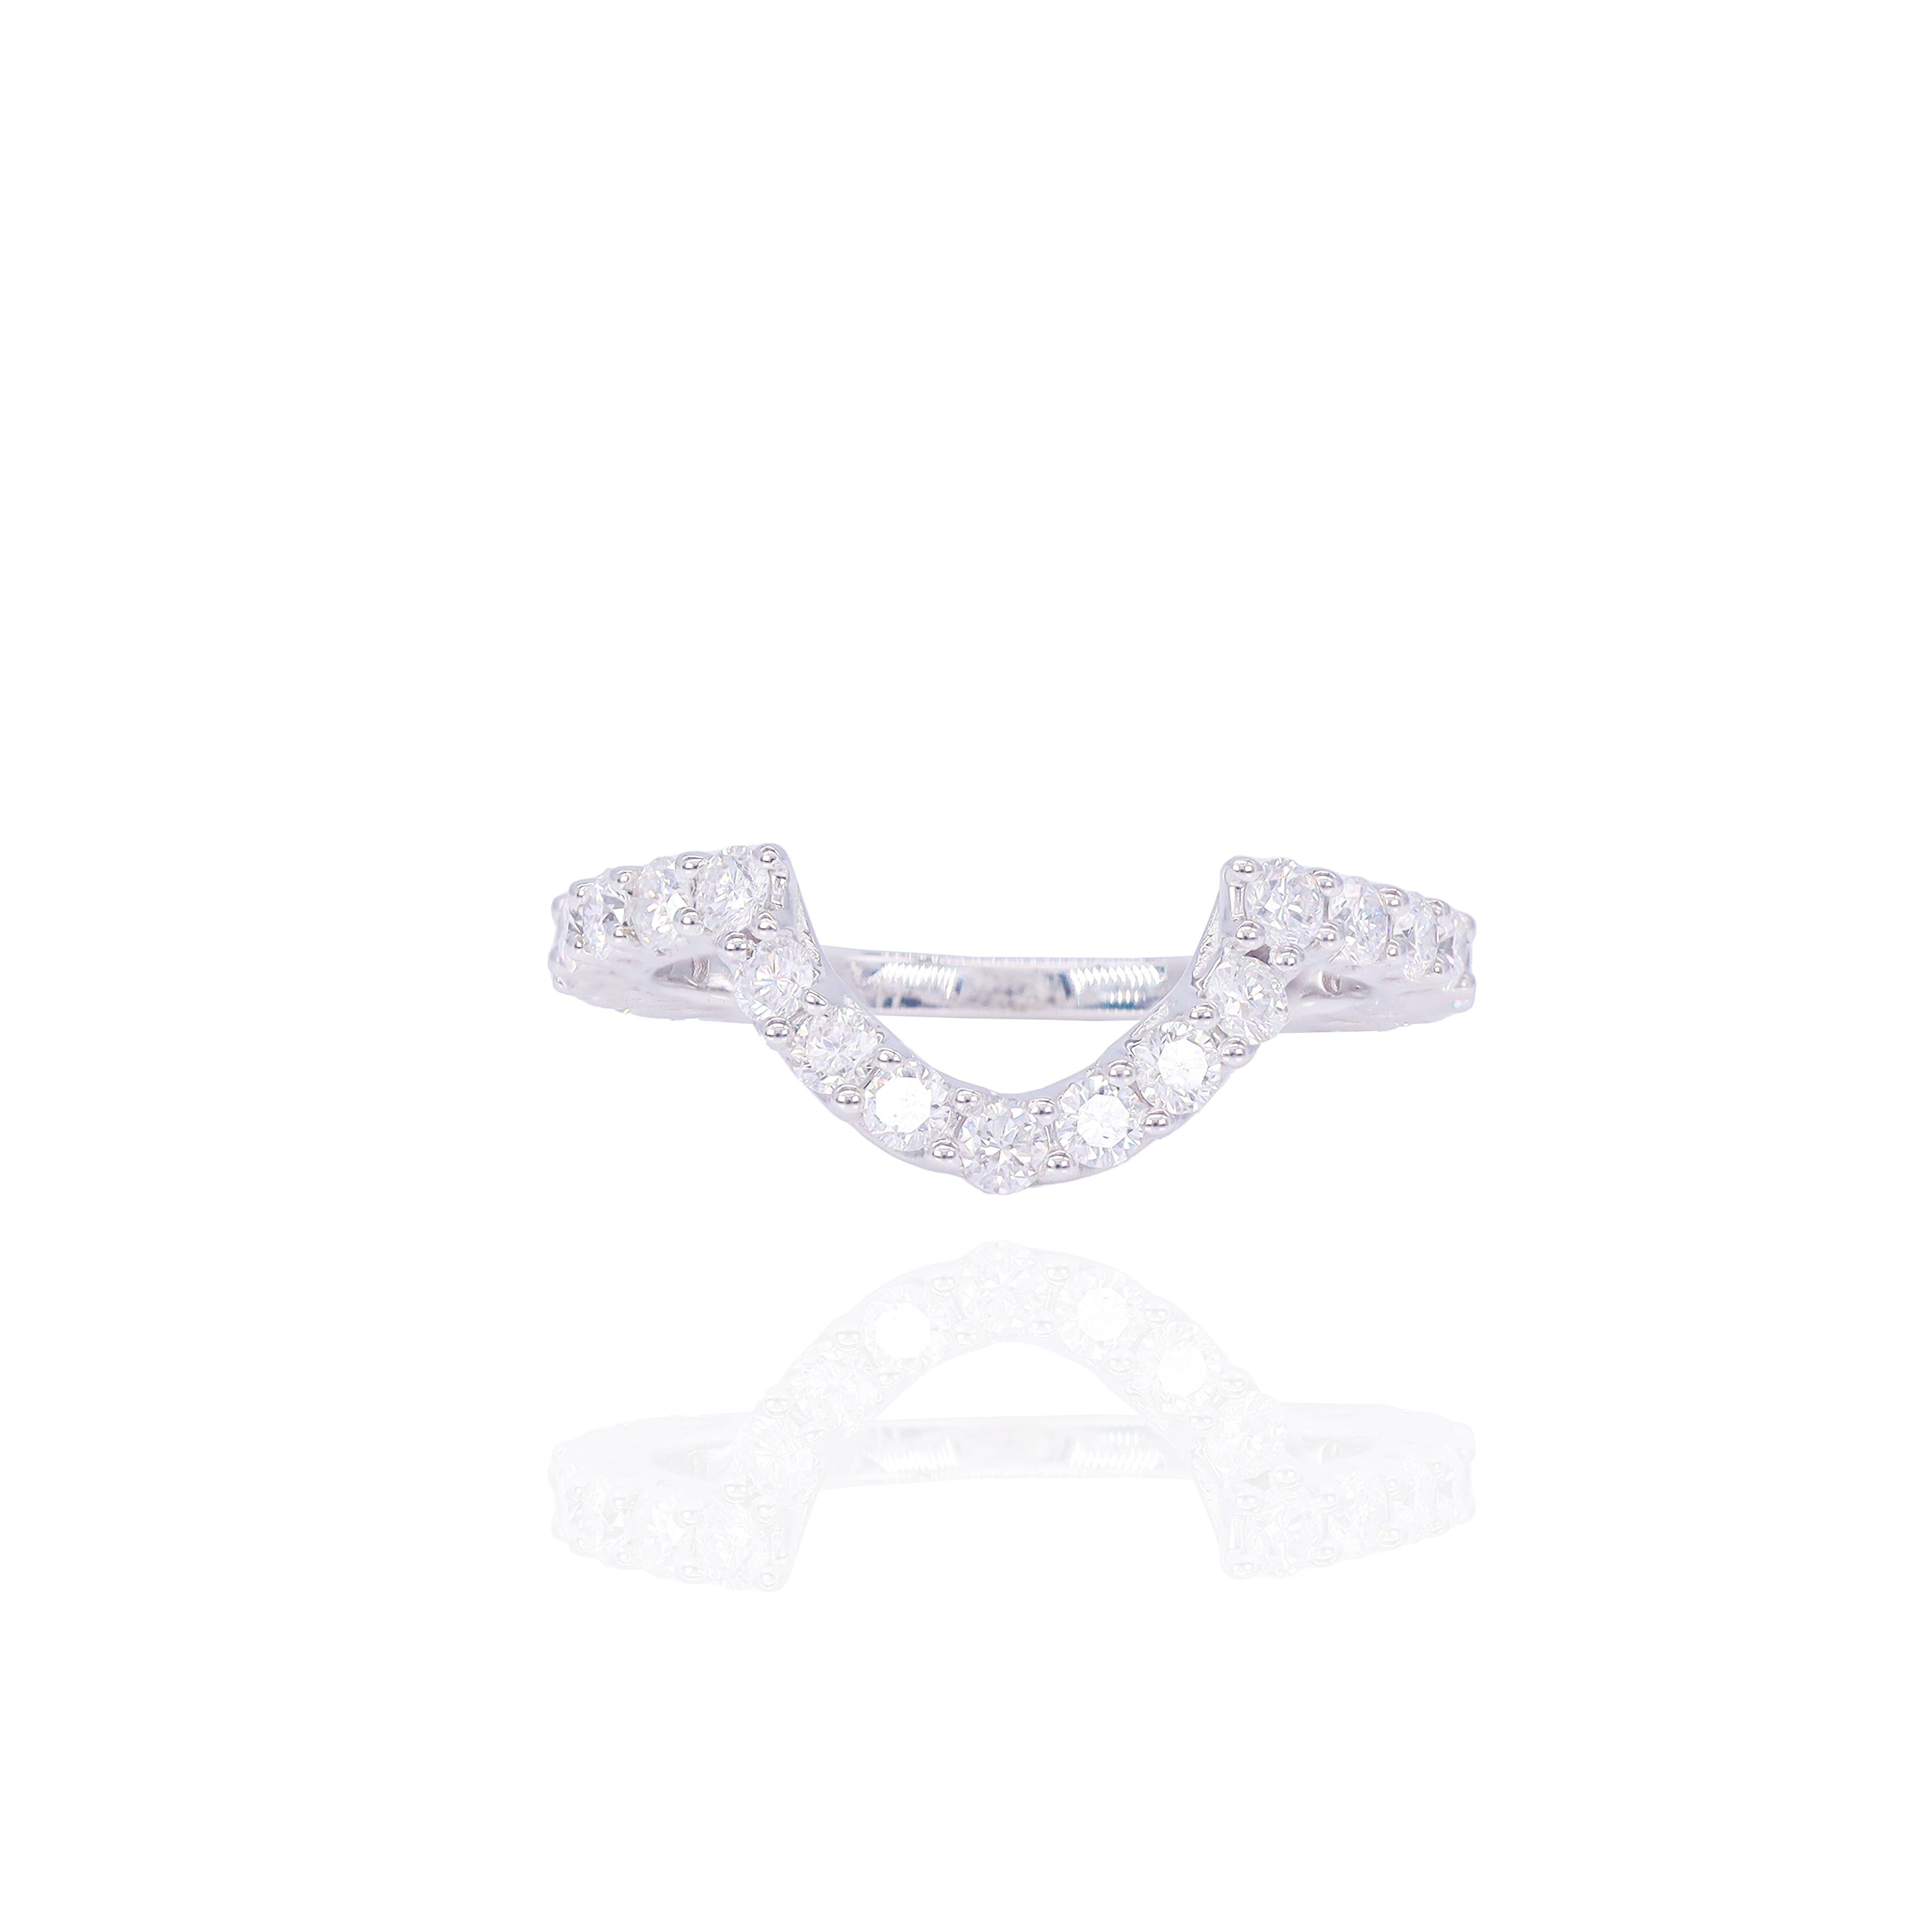 Oval Shaped Diamond Engagement Ring & Band